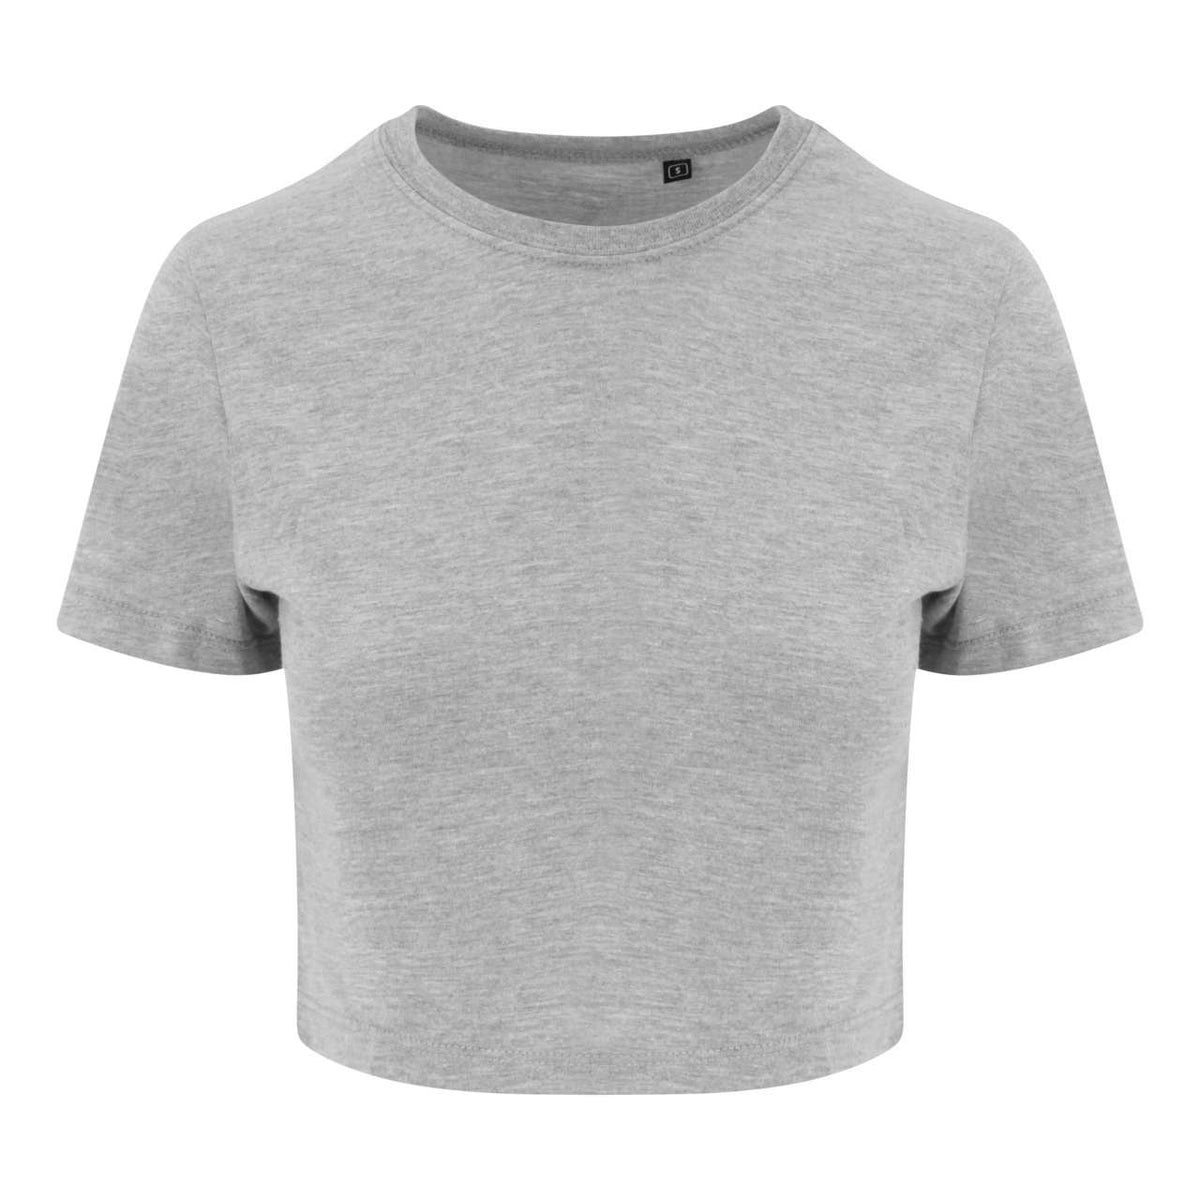 Just Ts Damen Cropped T-Shirt Shirt Slim Fit Baumwolle Oberteil